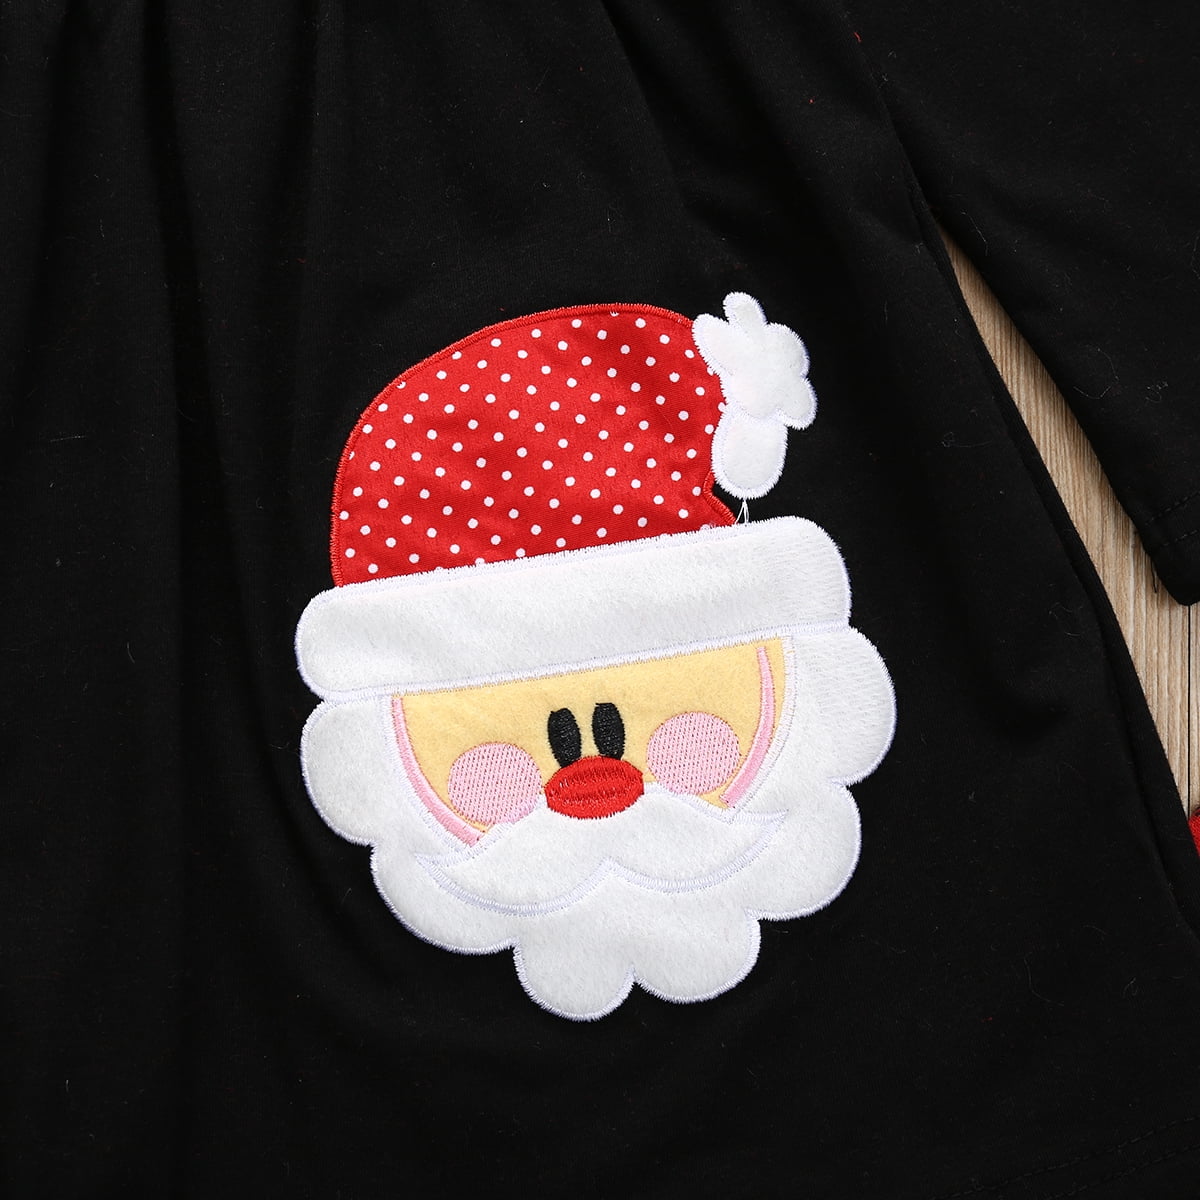 Gureui Kids Toddler Baby Girl Christmas Outfit Santa Print Dress Shirt  Tunic Top Plaid Leggings Pants Set with Scarf 1-6T 